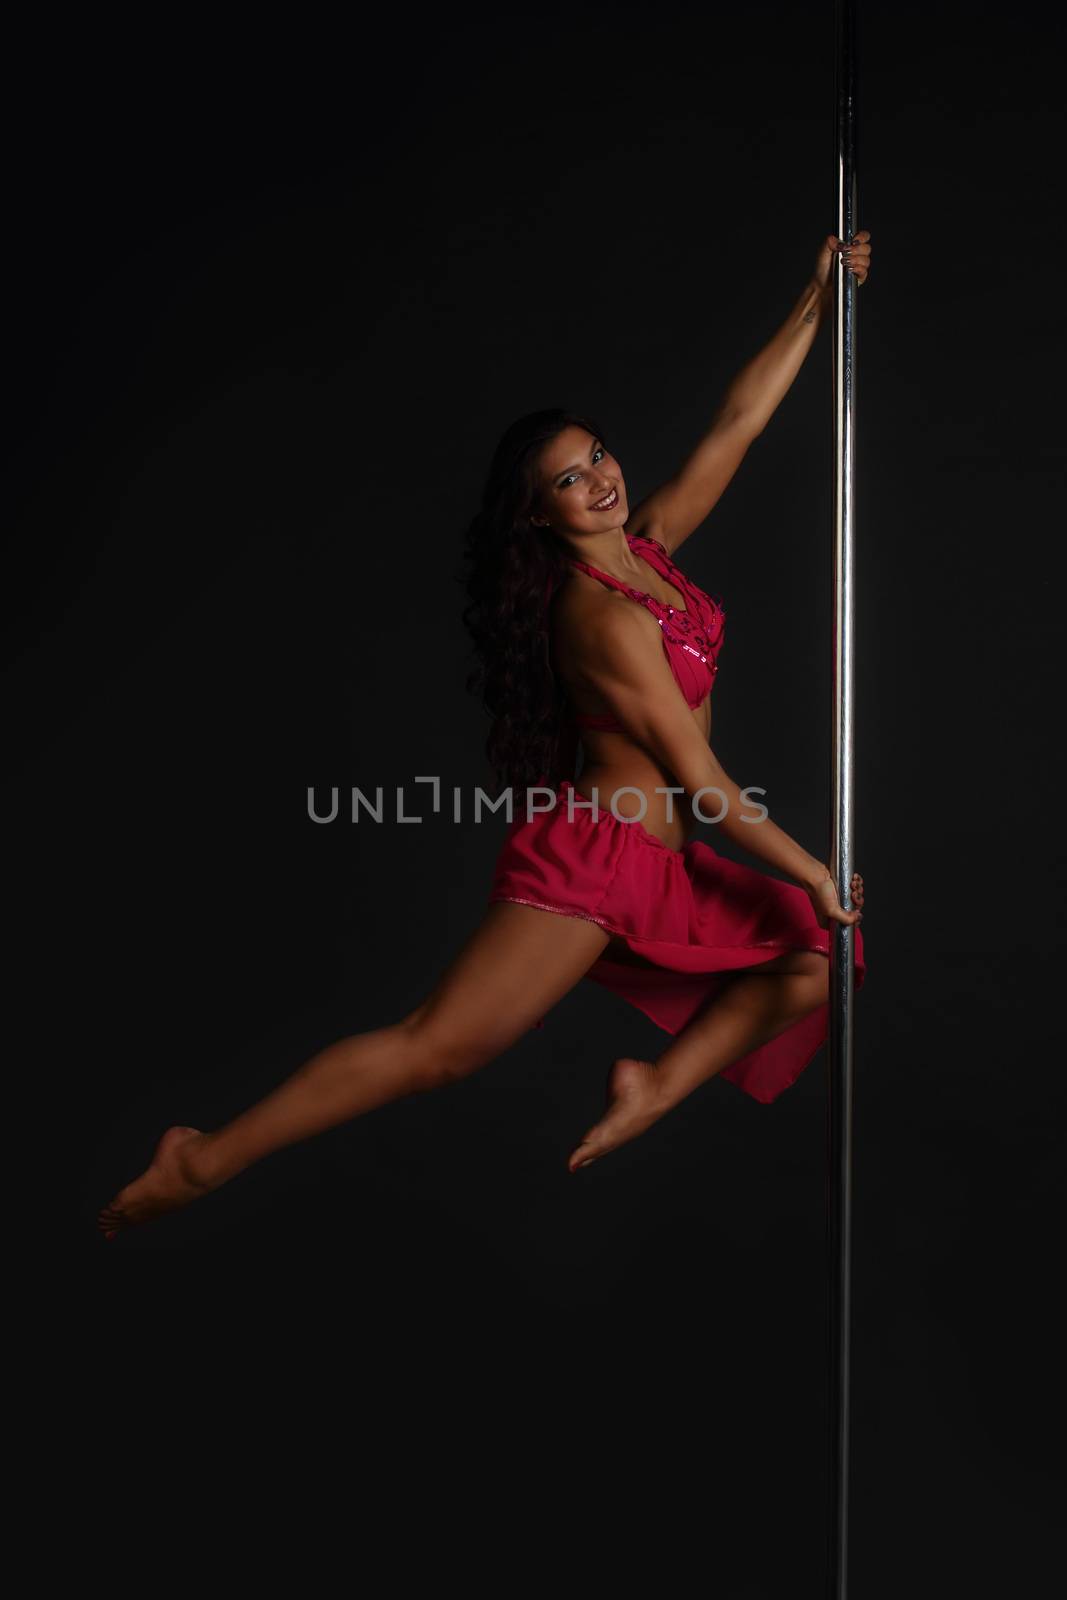 Beautiful woman performing pole dance, studio shot on black background